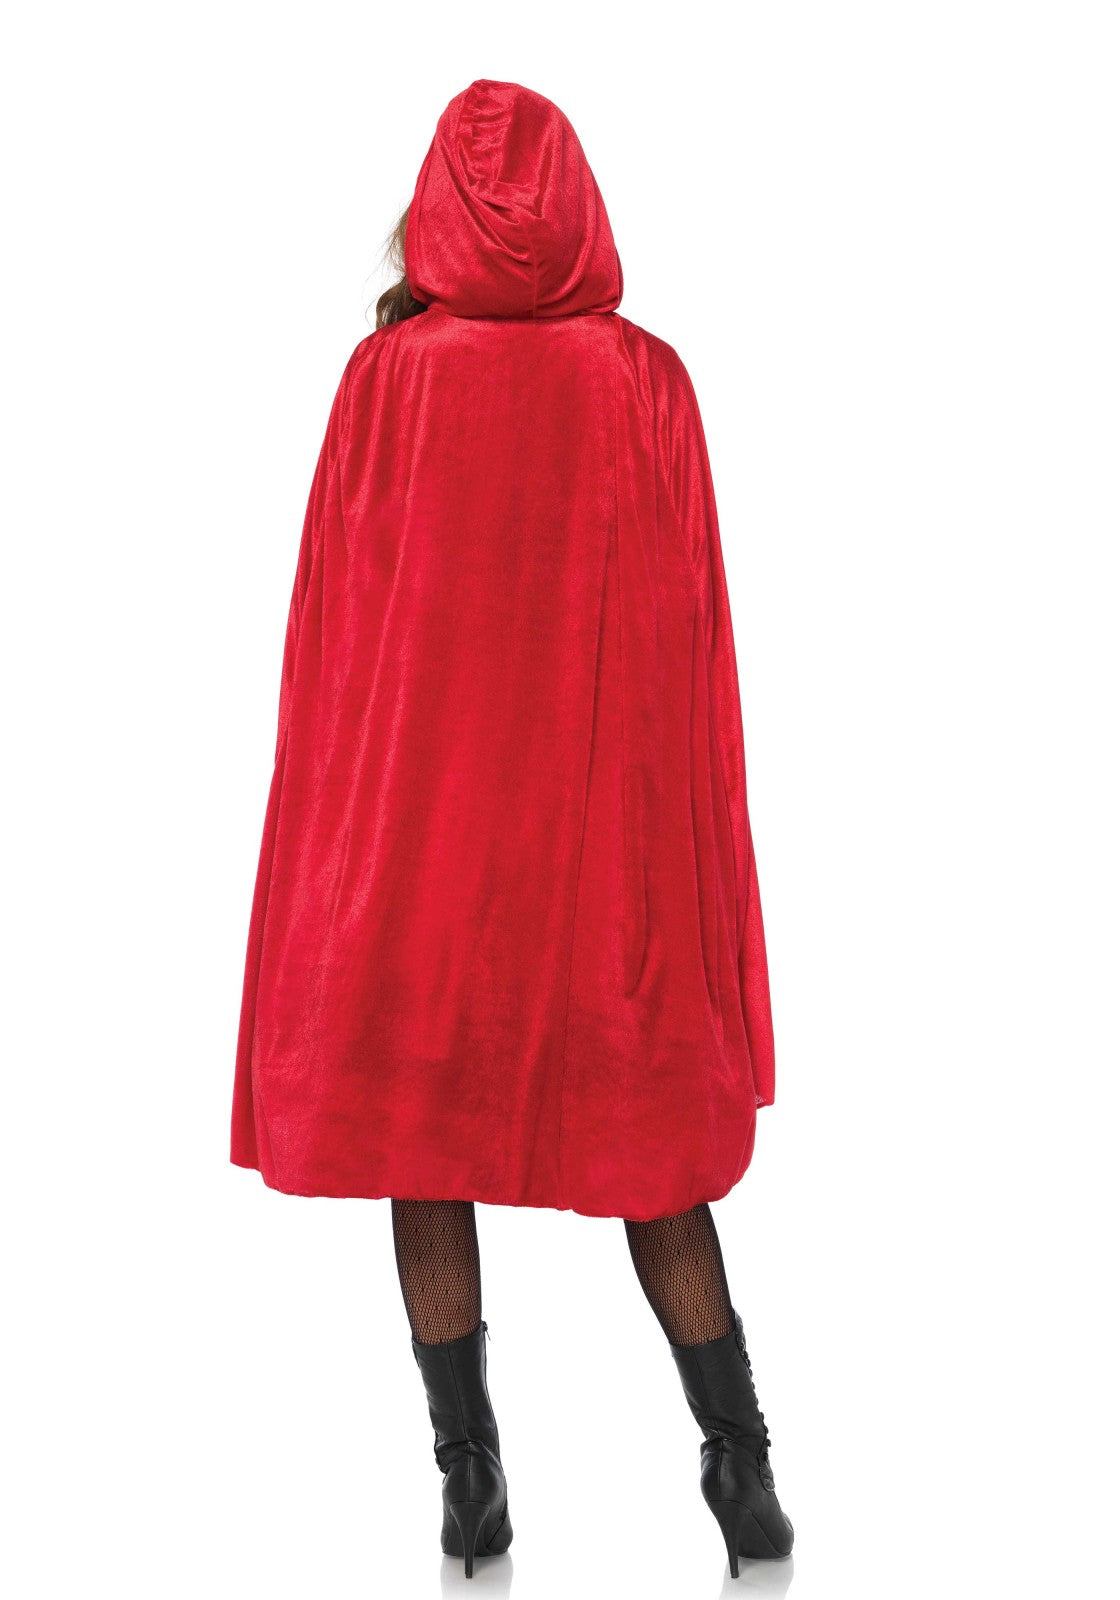 Leg Avenue 85614 Classic Red Riding Hood